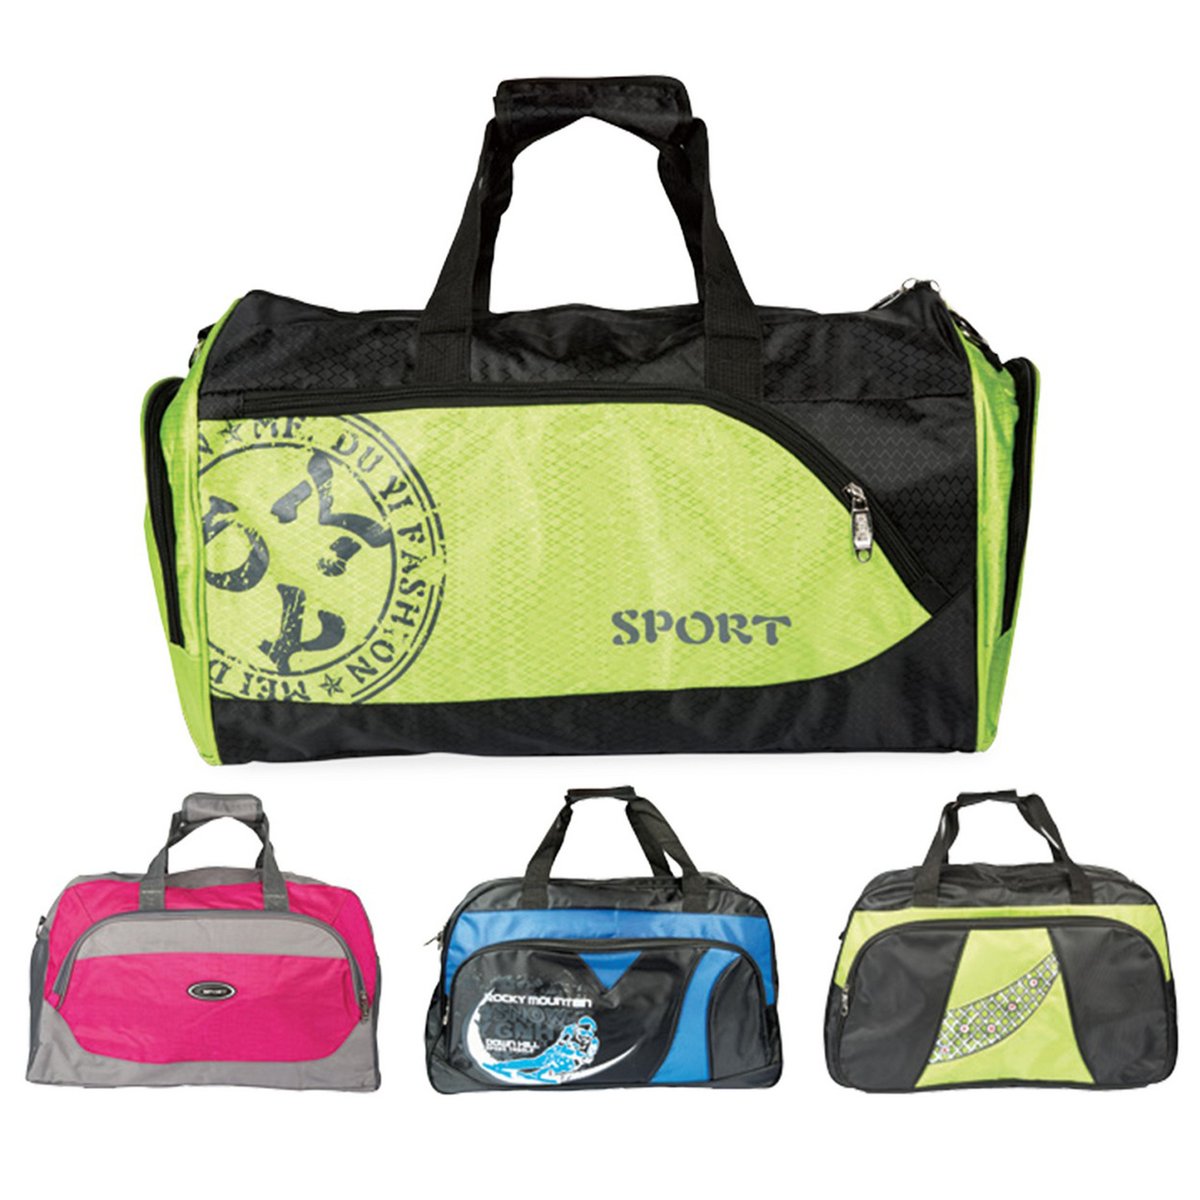 Sport Travel Bag Assorted per pc